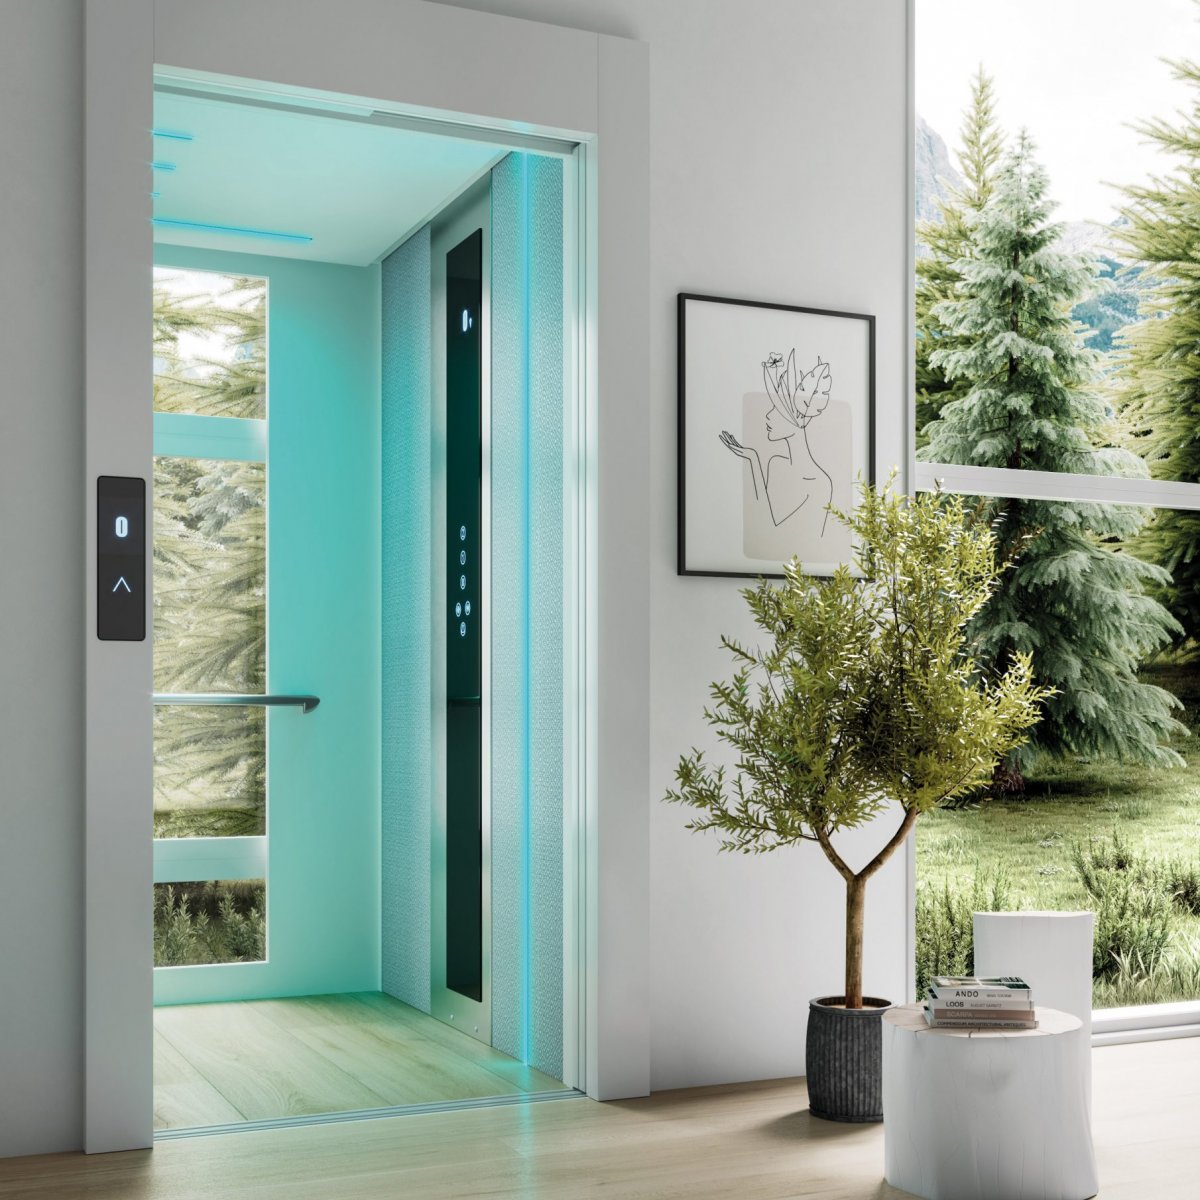  The Elite Home | Simplex Elevators Gallery Image 10